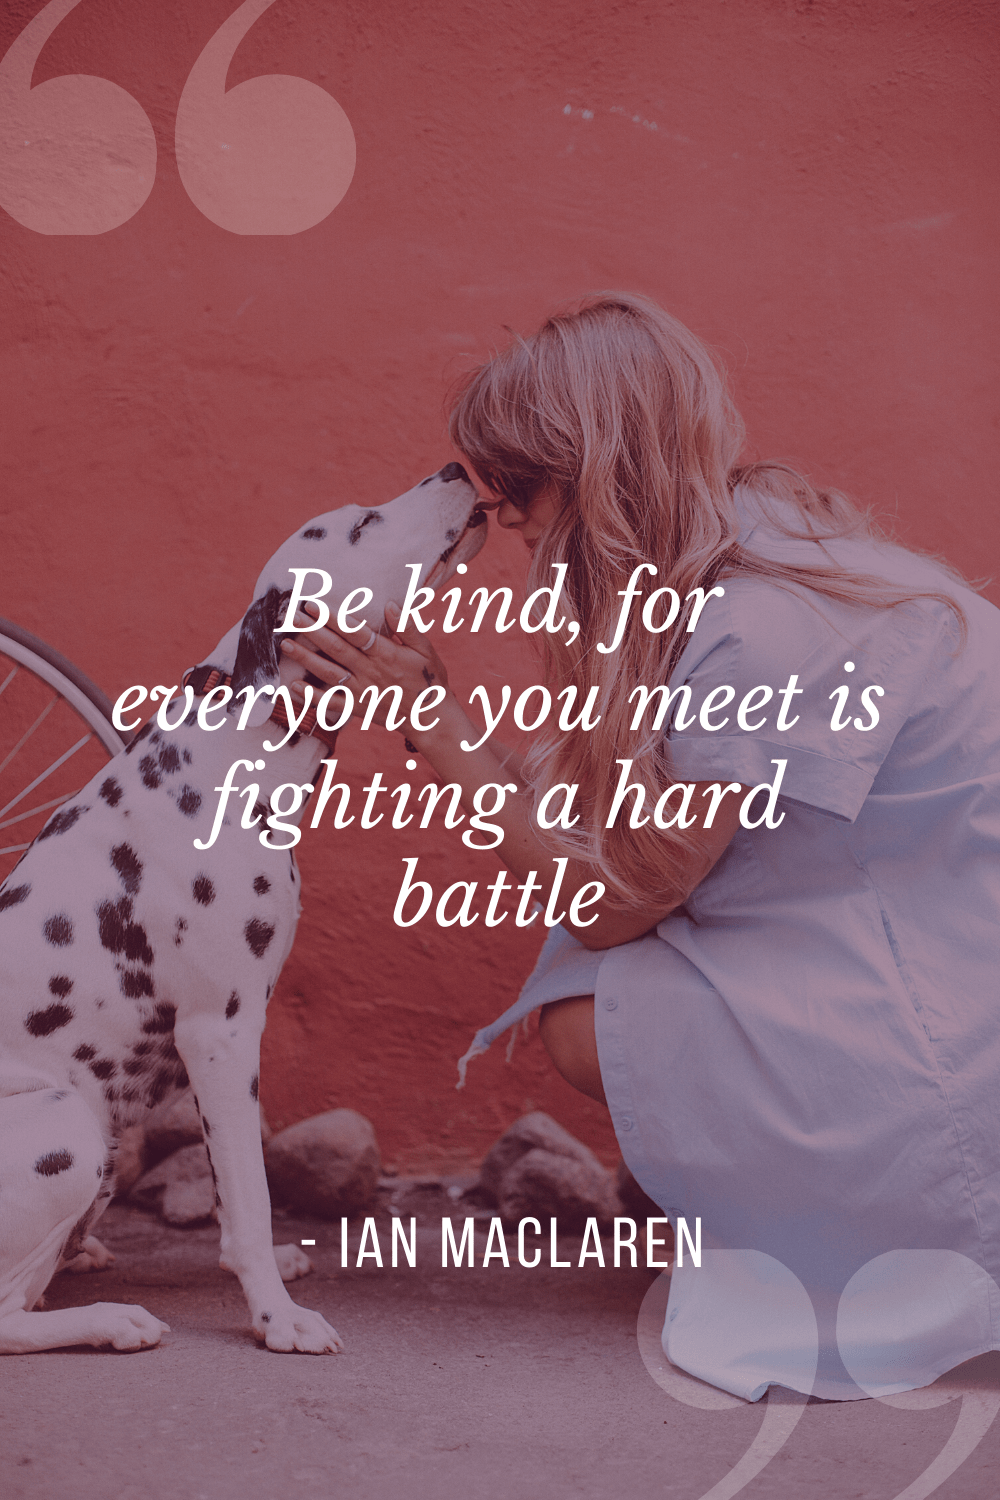 “Be kind, for everyone you meet is fighting a hard battle”, Ian MacLaren